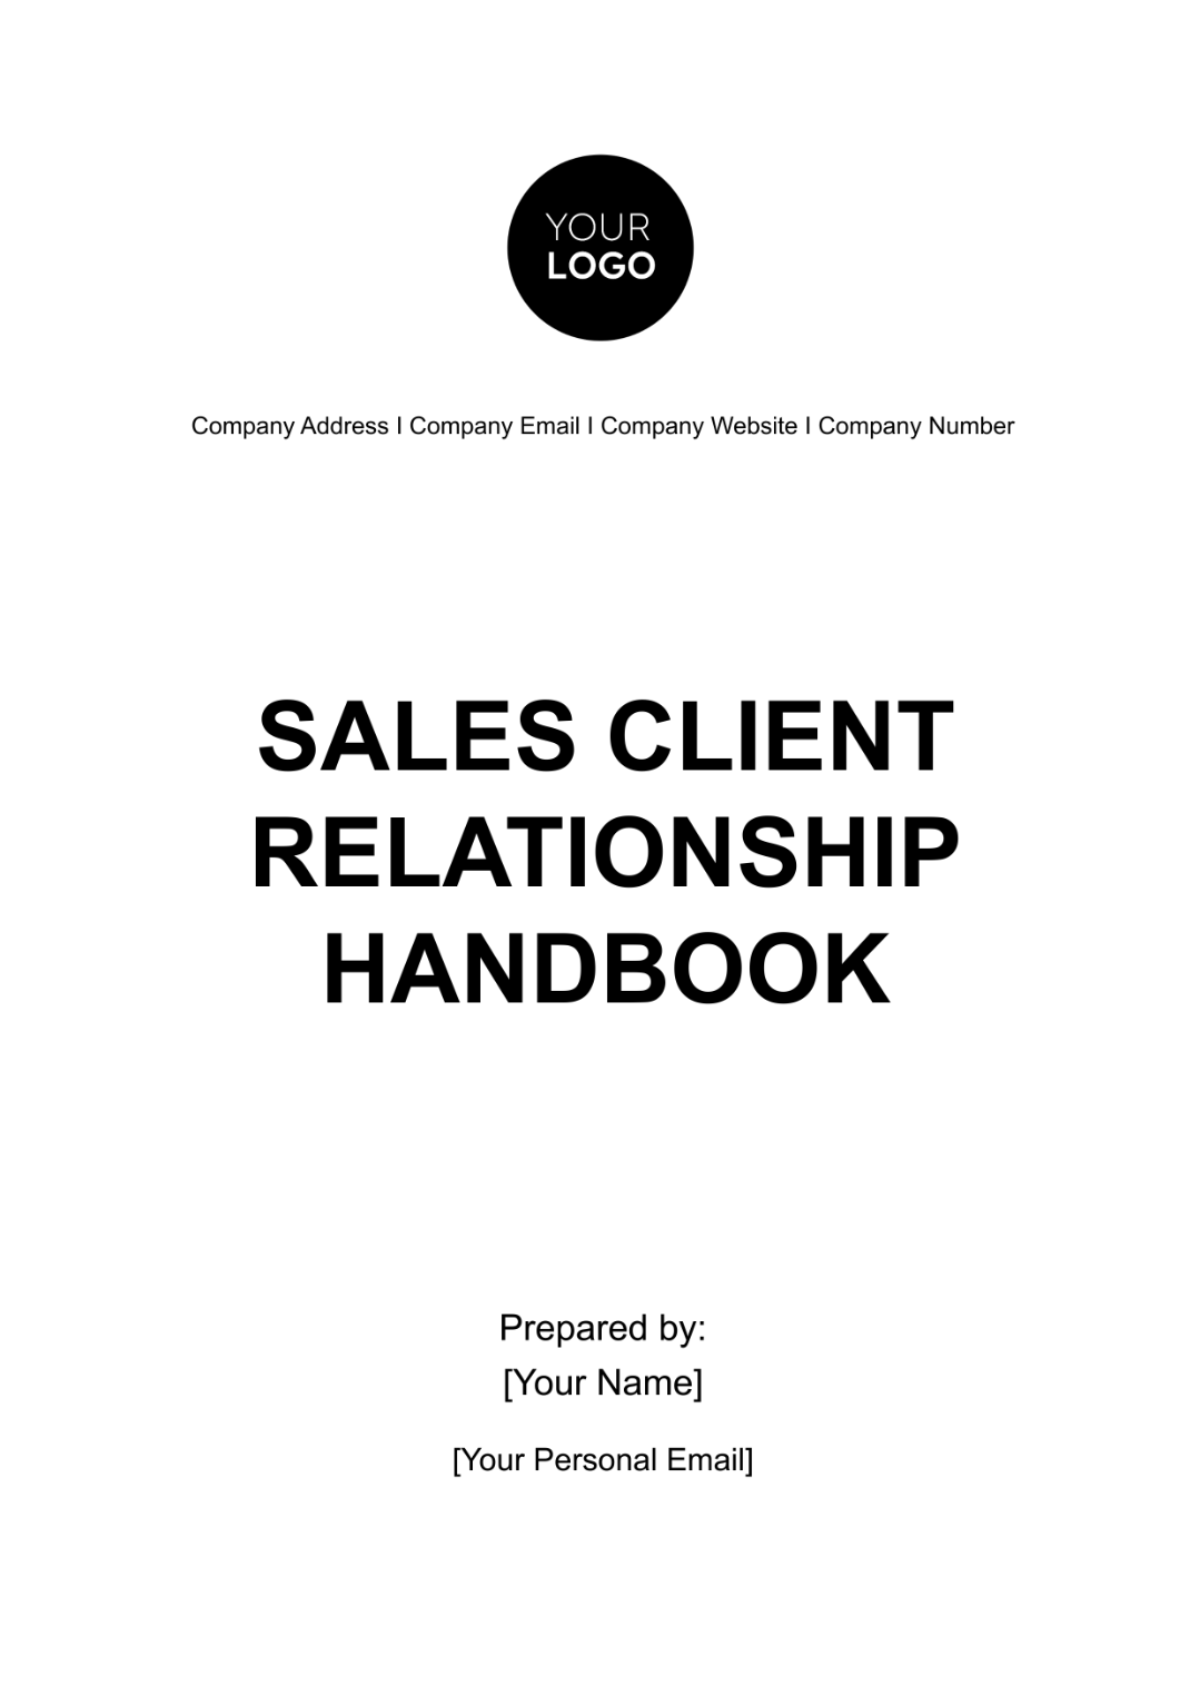 Sales Client Relationship Handbook Template